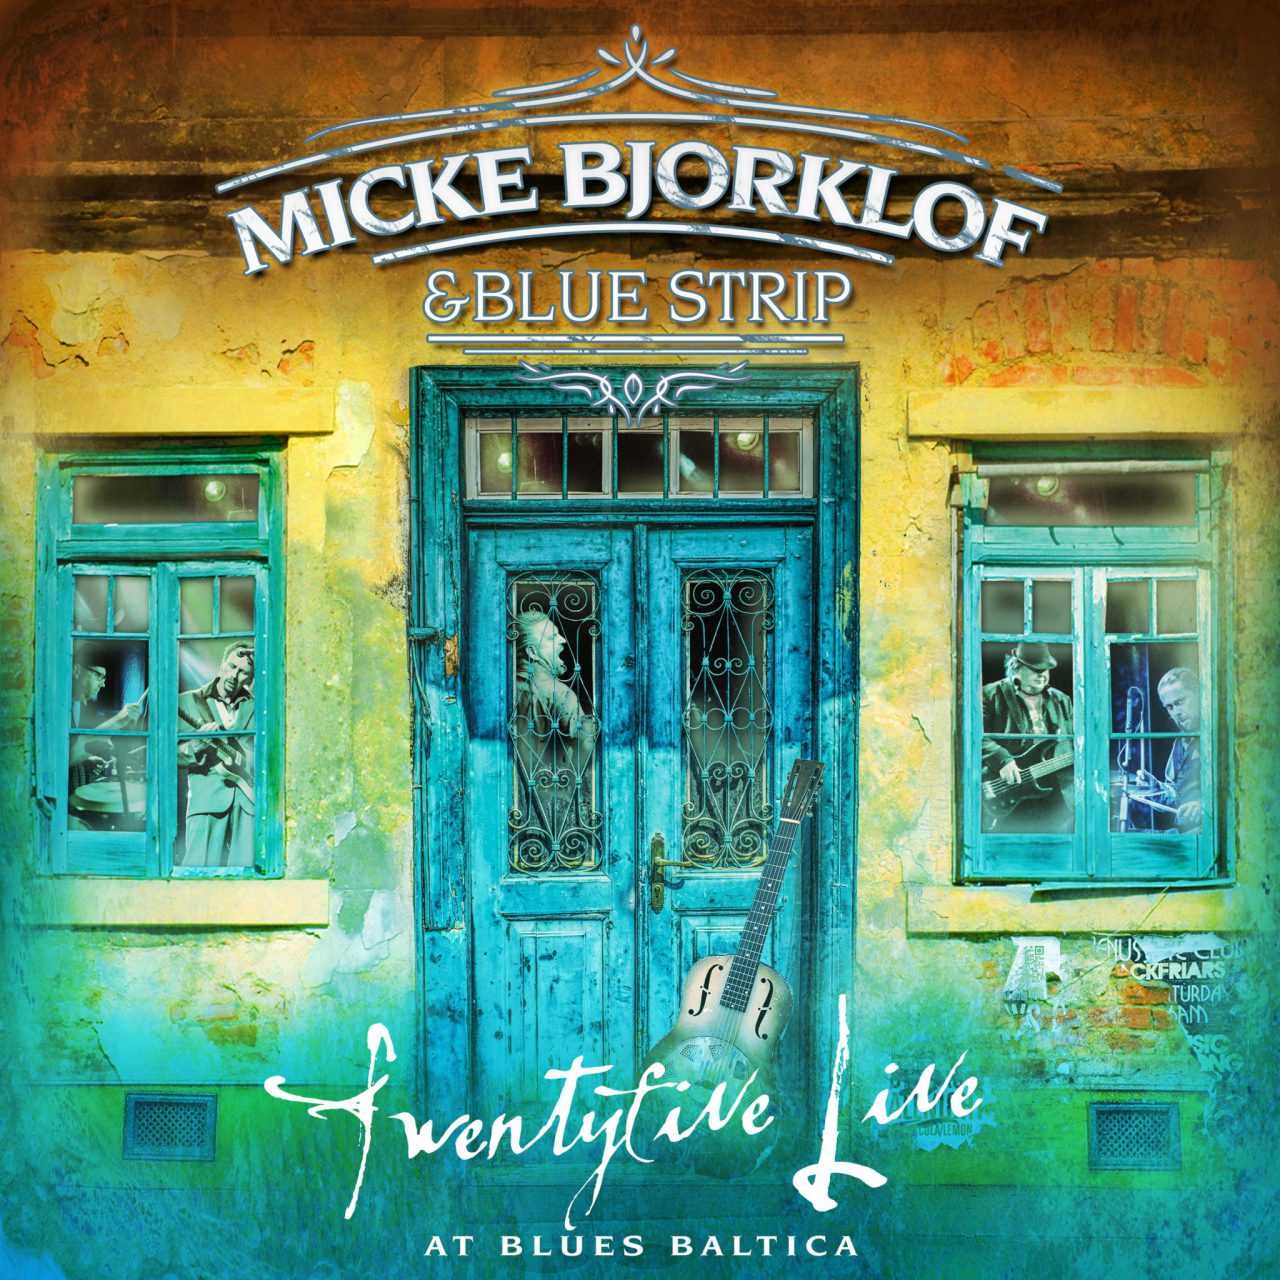 Micke Bjorklof & Blue Strip – Twentyfive Live at Blues Baltica